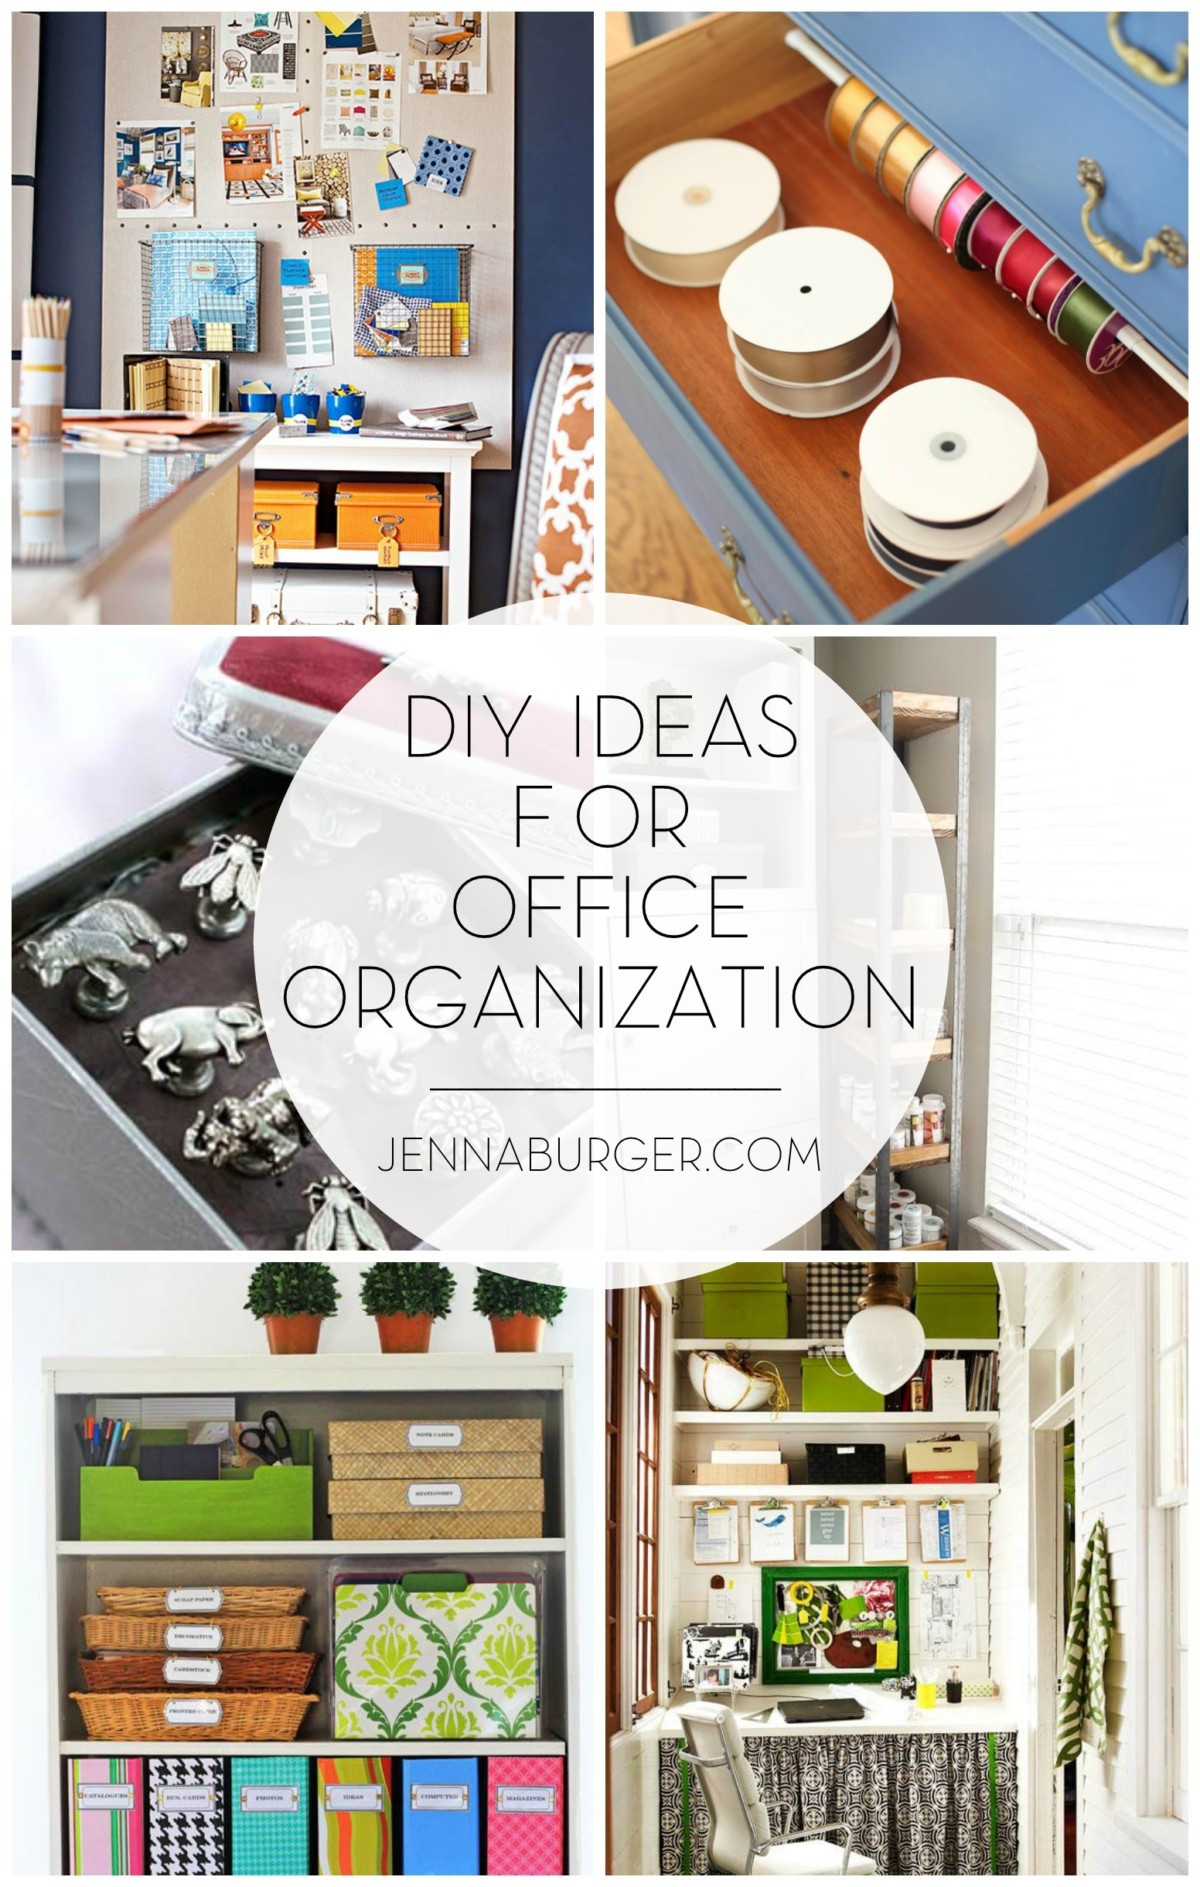 DIY Home Office Organization
 DIY fice Organization Jenna Burger